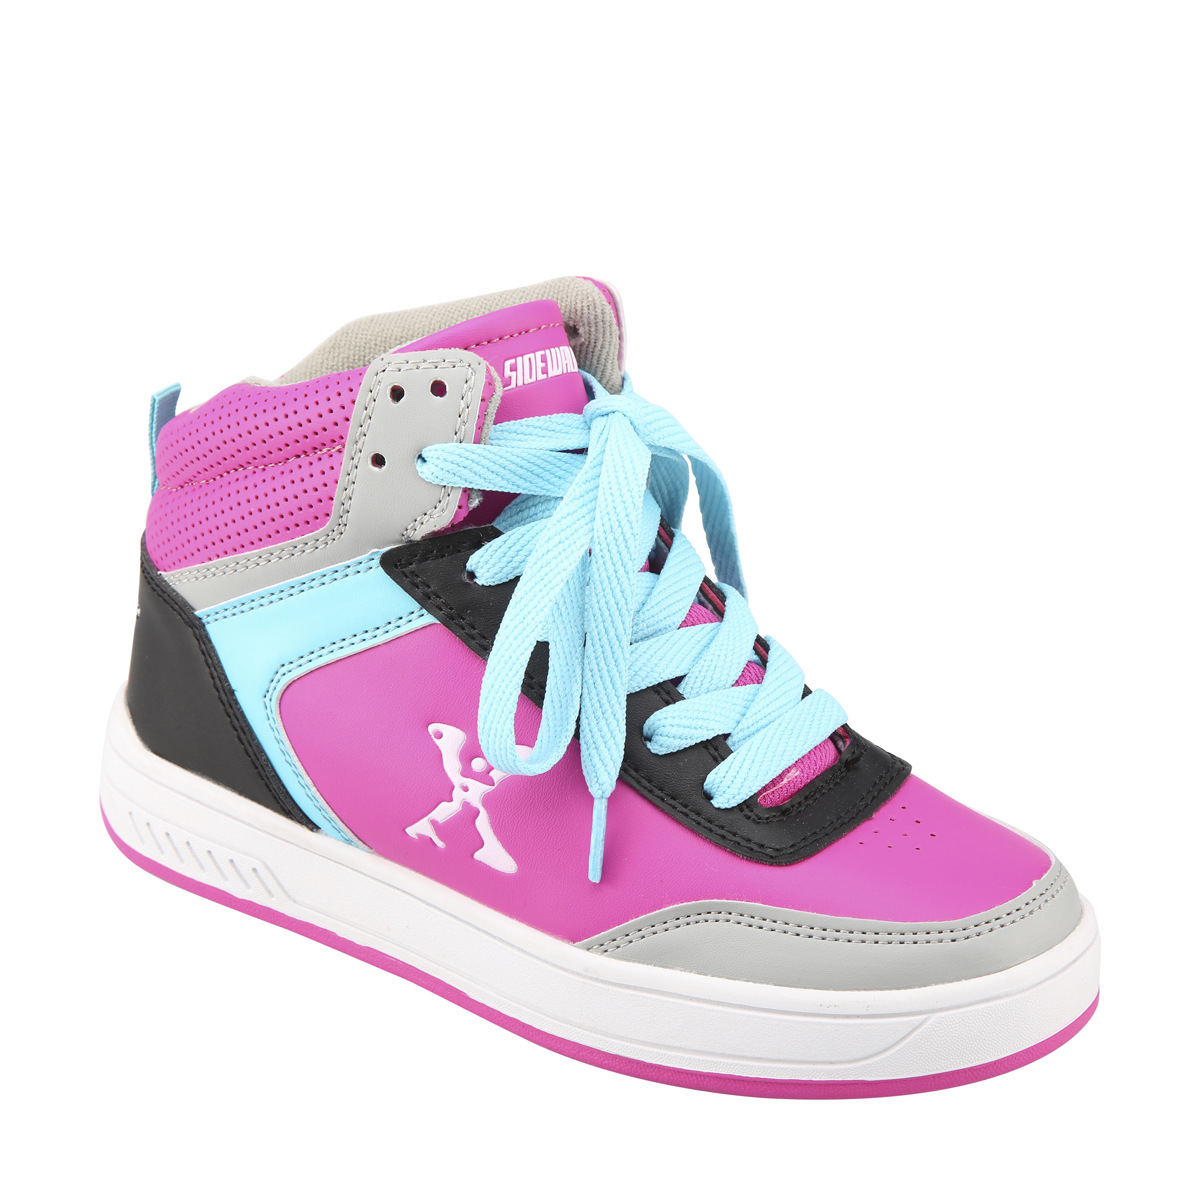 Sidewalk Sports Size 4 Pink Skate Shoes